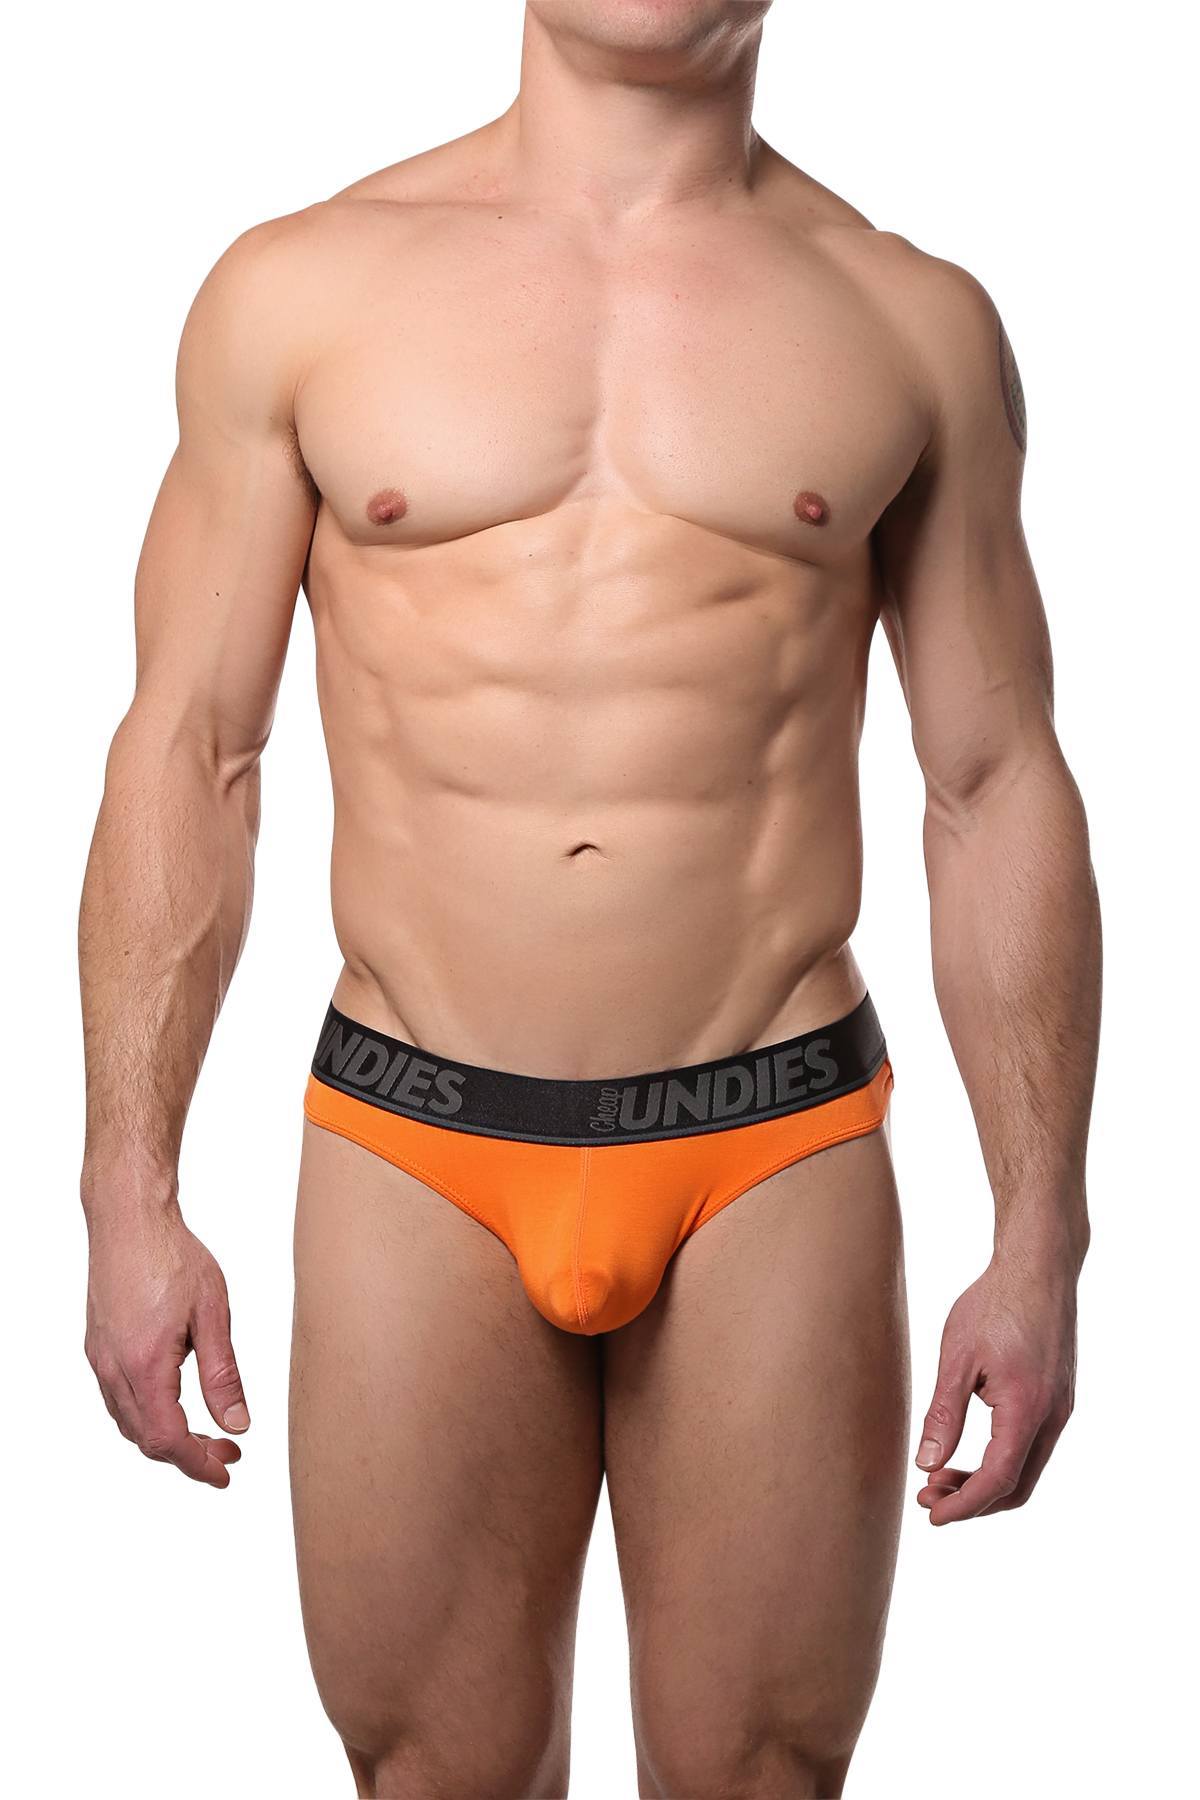 Sksloeg Cotton Thongs Panties No Show Thong Seamless Underwear Low Rise  Comfortable Microfiber Workout,Orange S